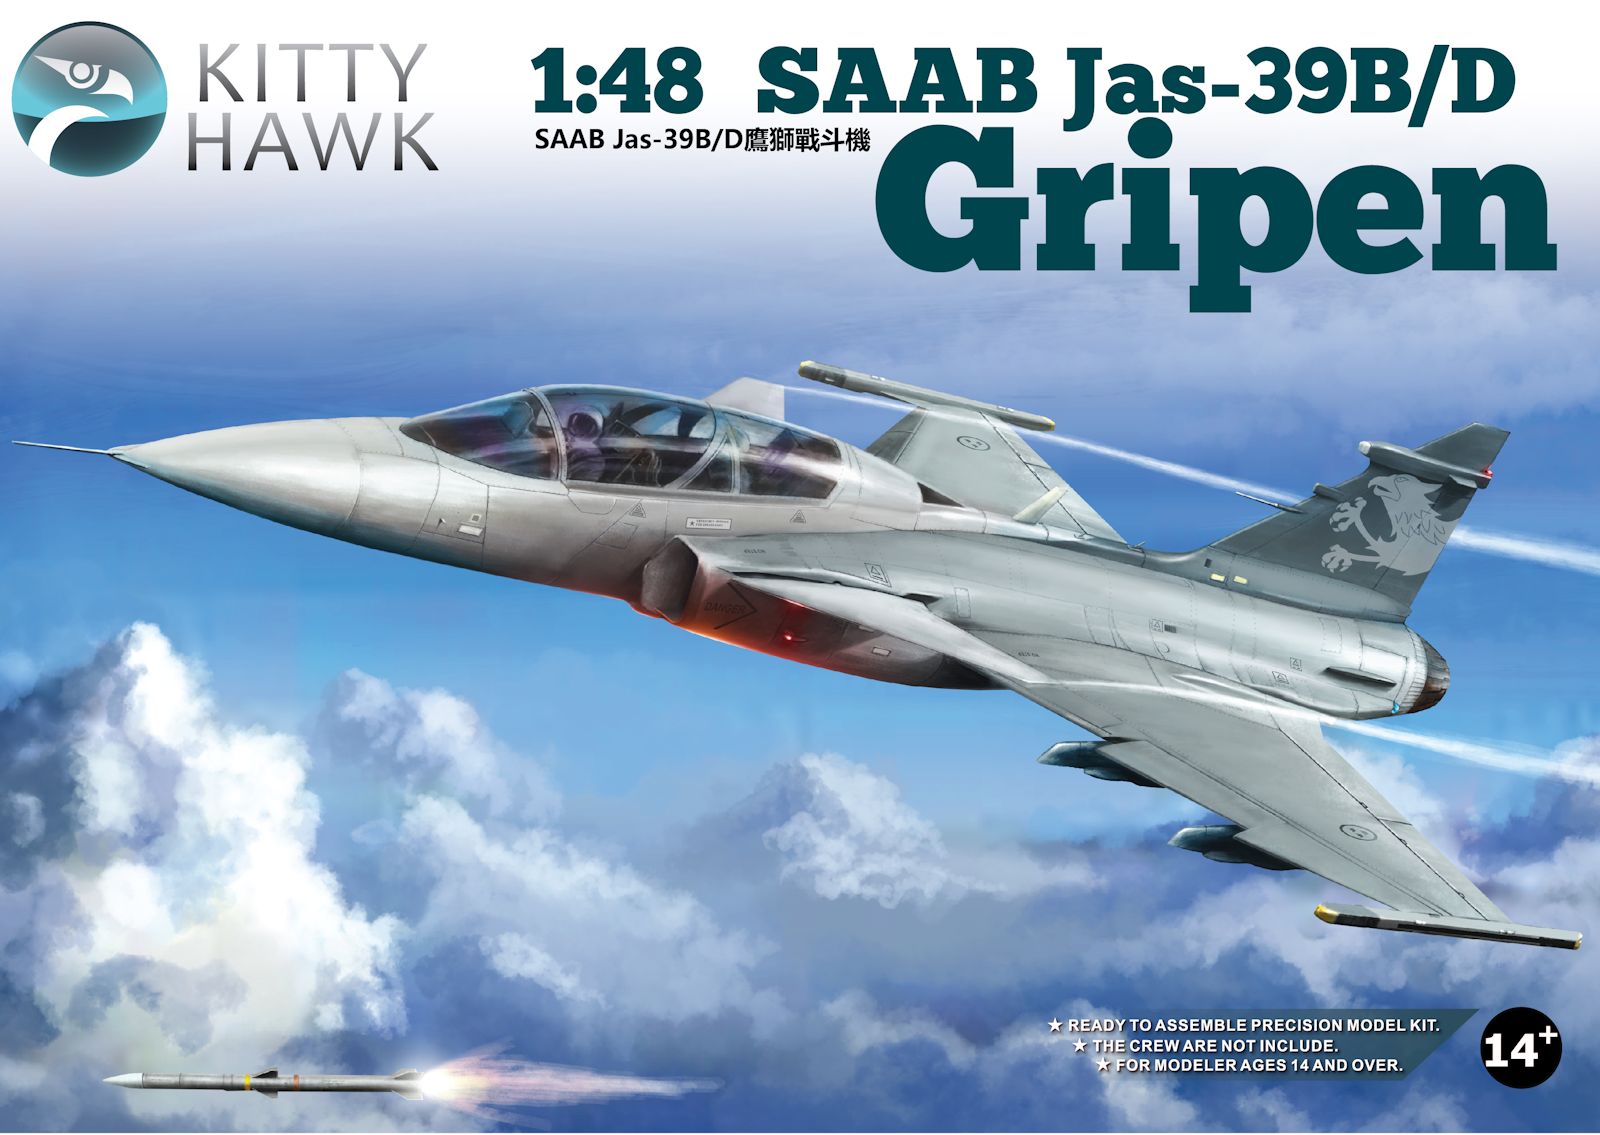 Aires 1/48 Jas-39 Gripen wheel bay for Kitty Hawk kit # 4610 